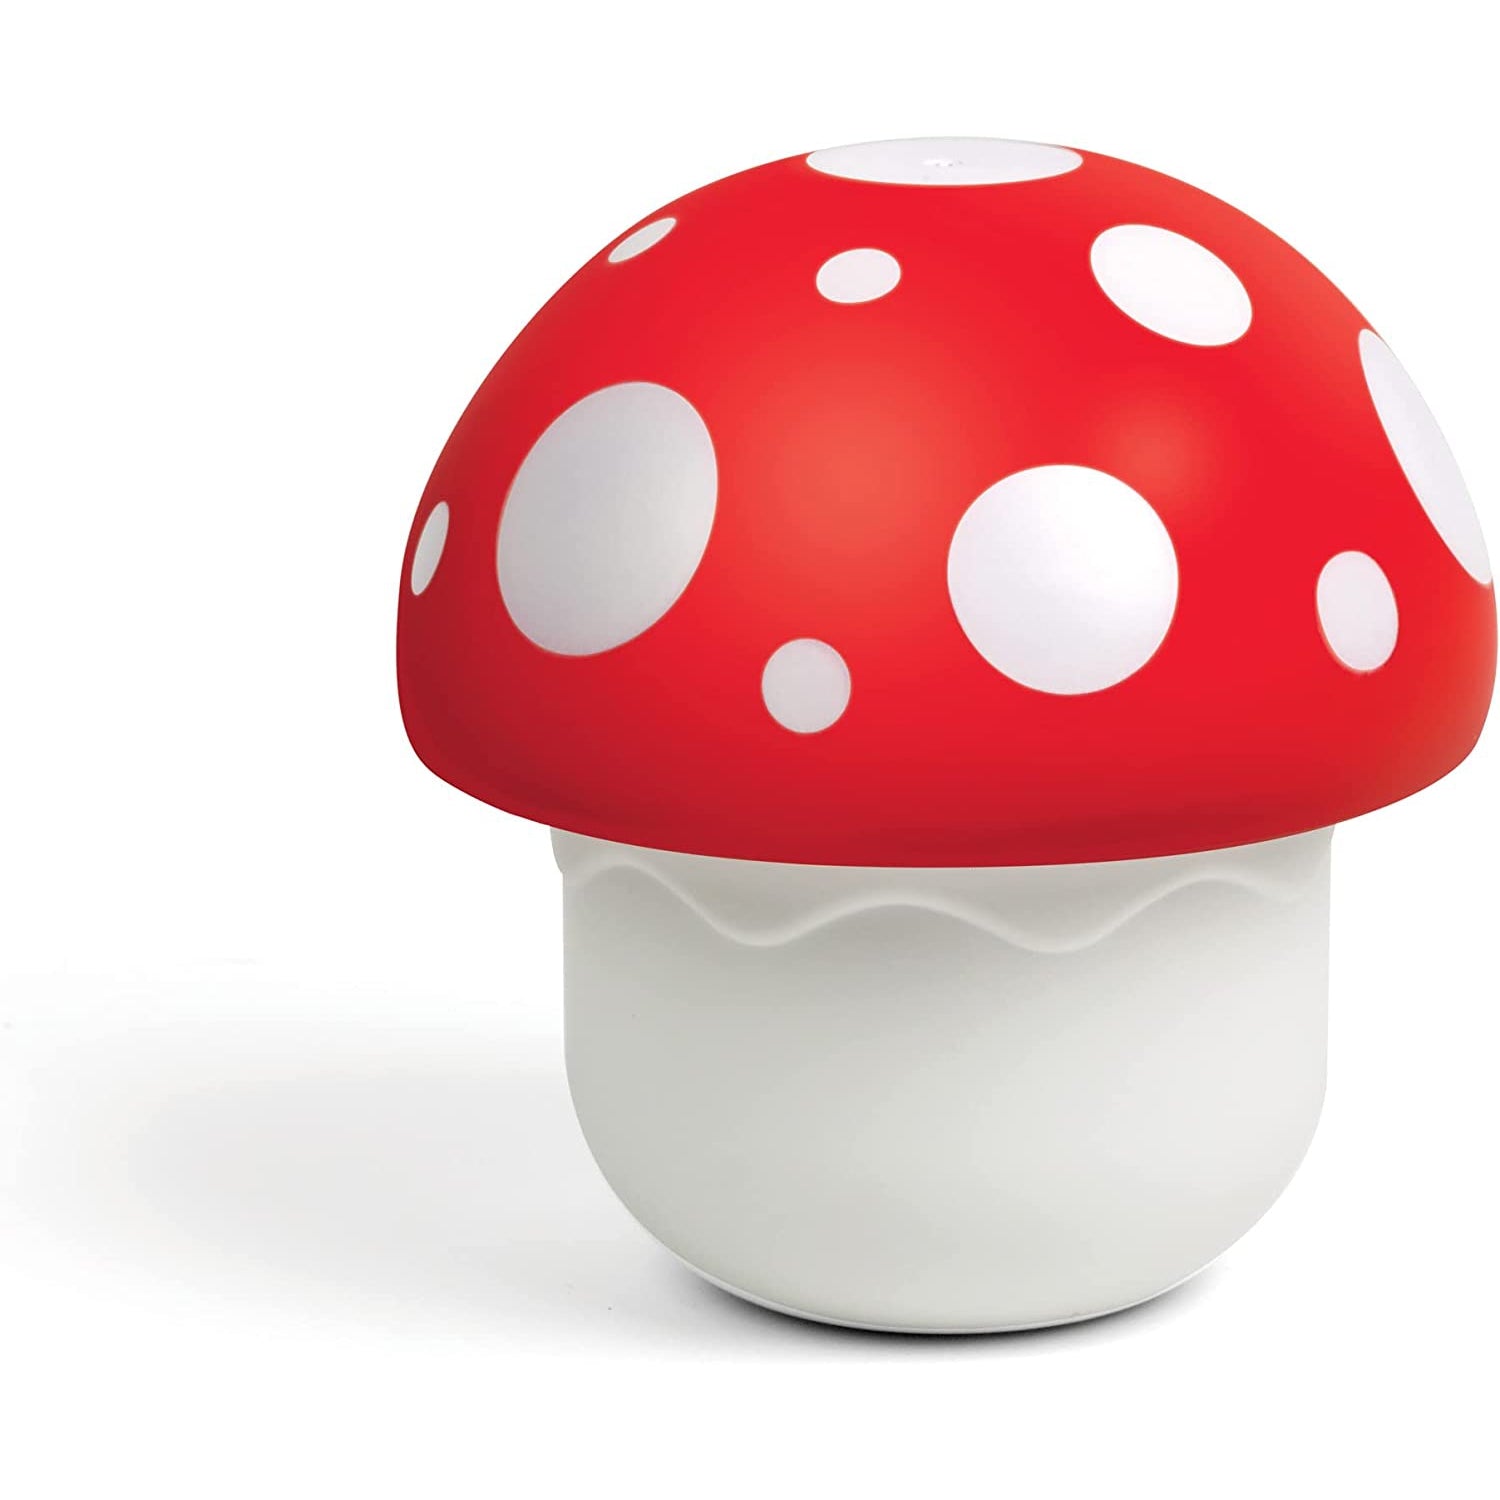 Mushroom Dry Measuring Cups | Cooking Baking Set of 6 Nesting Mushroom Cups